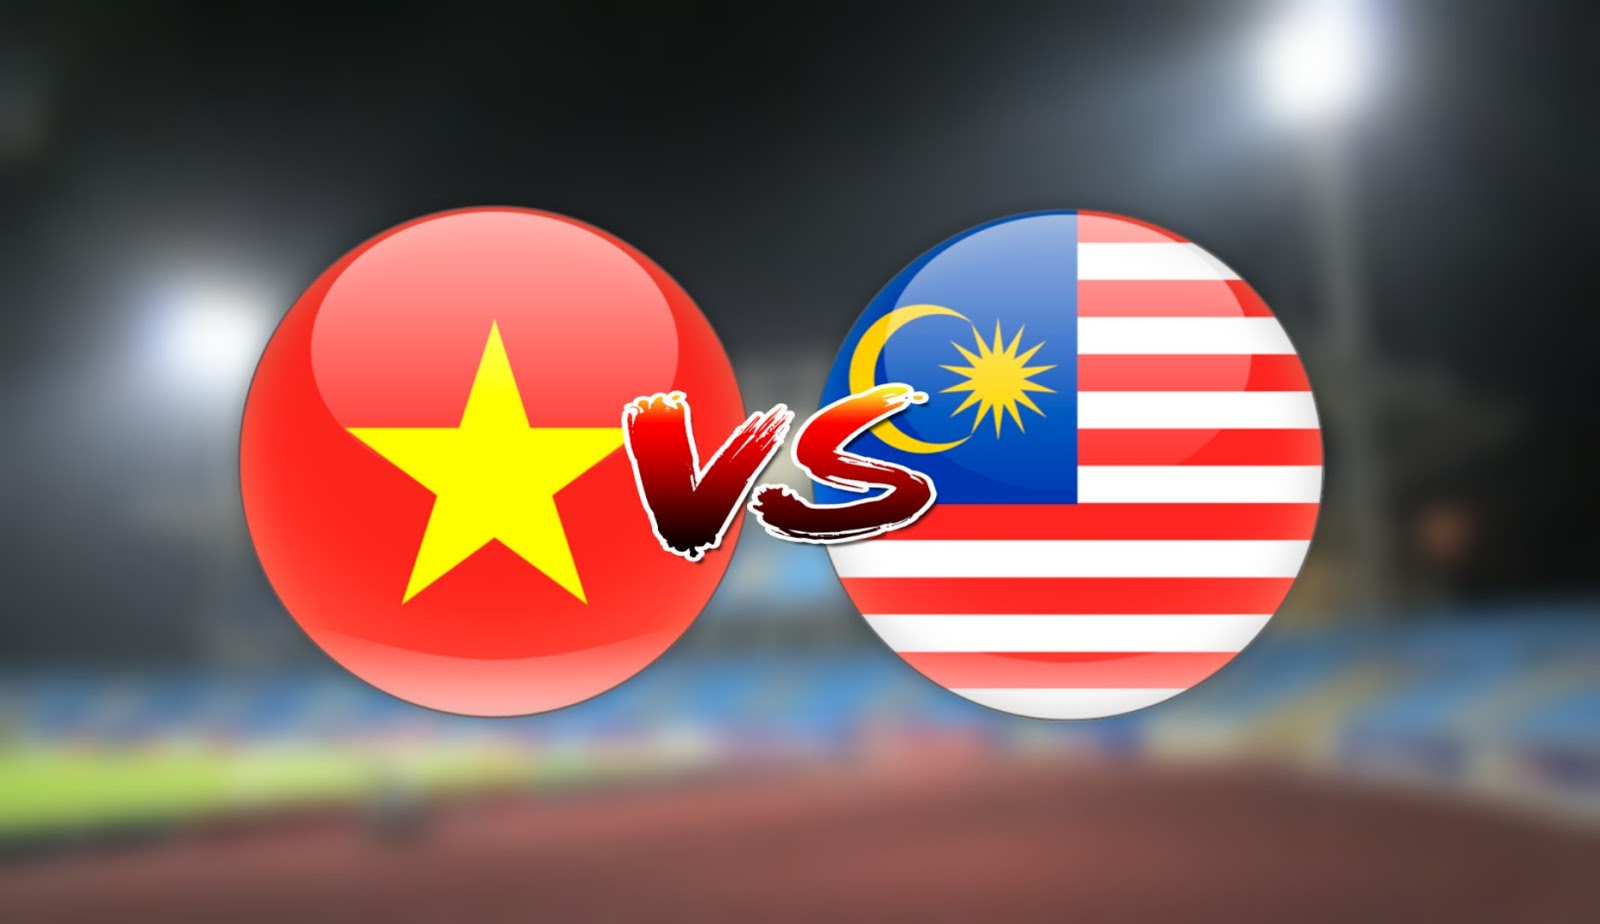 Jadual perlawanan malaysia vs vietnam